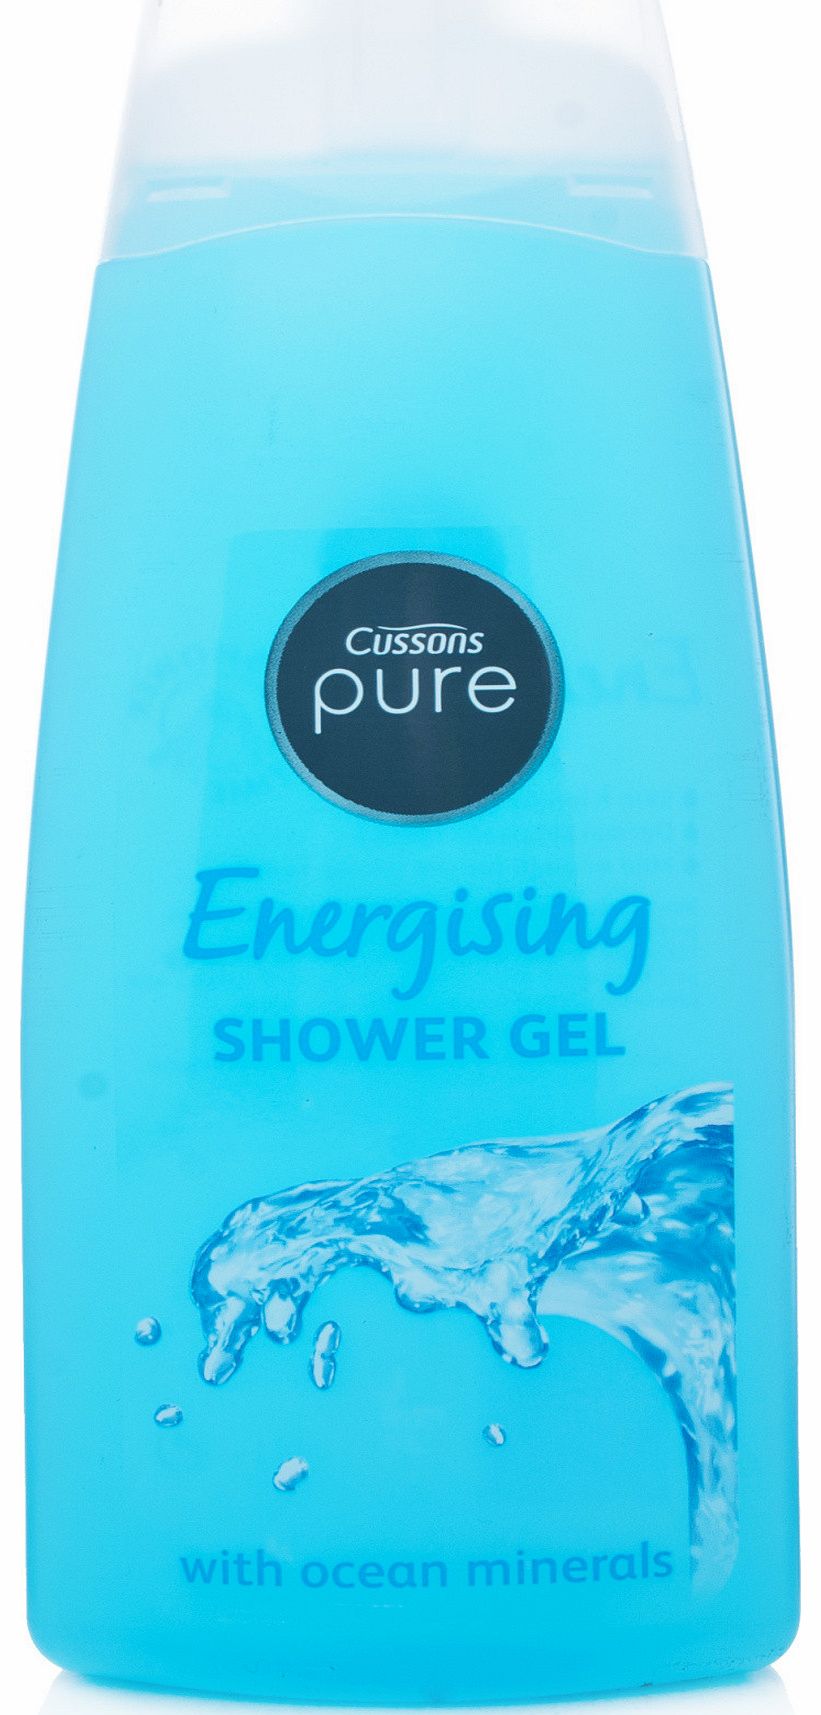 Cussons Pure Energising Shower Gel